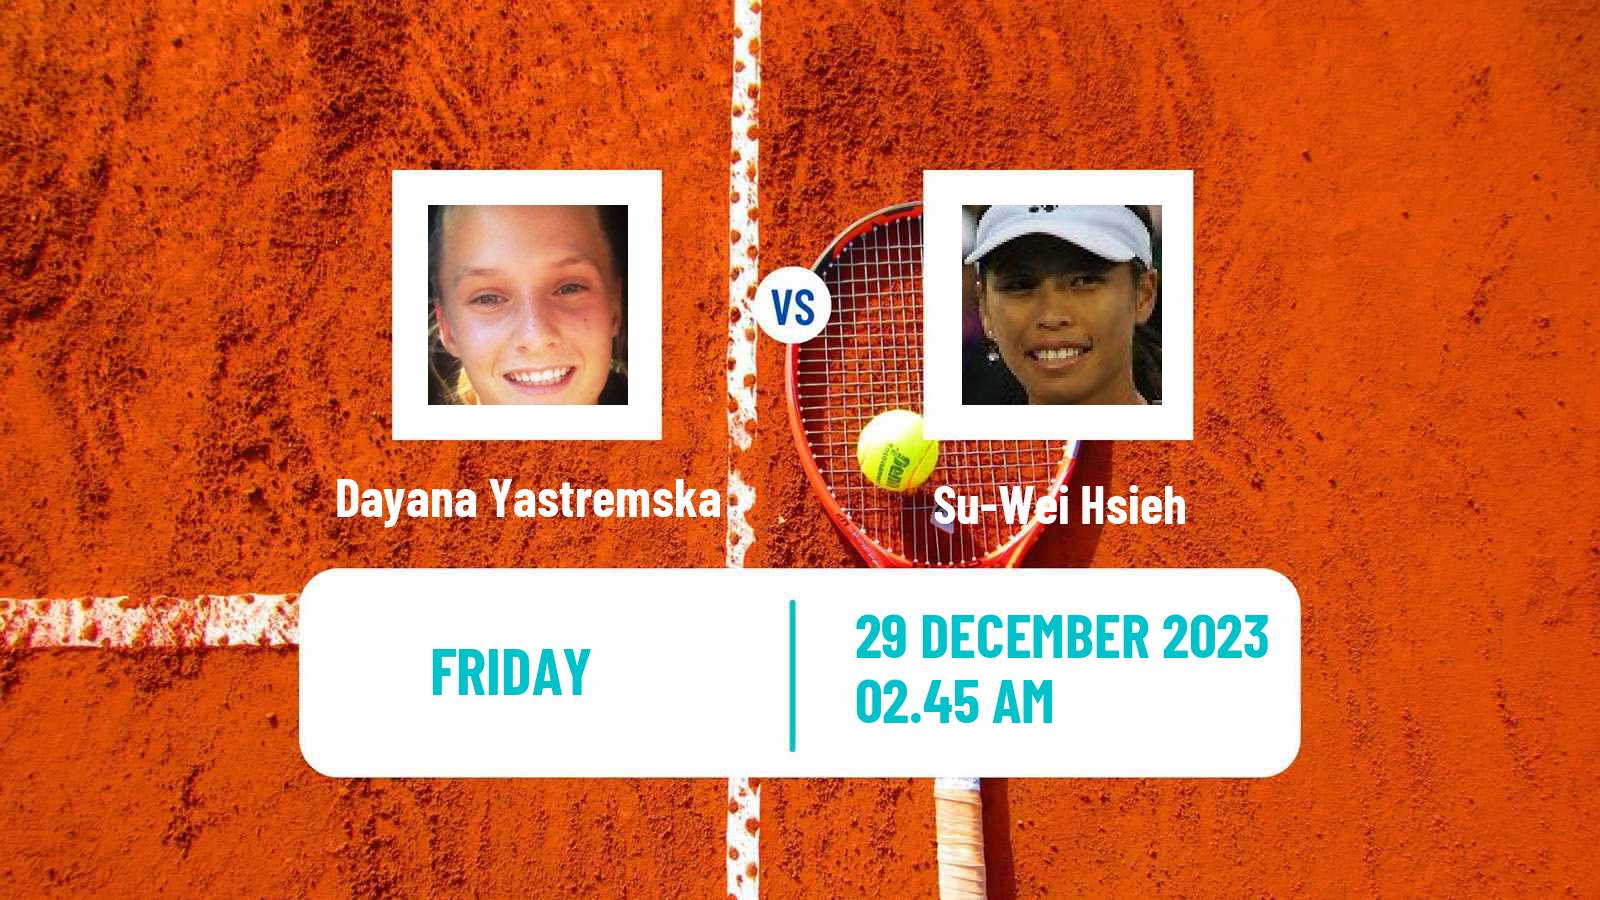 Tennis WTA Brisbane Dayana Yastremska - Su-Wei Hsieh